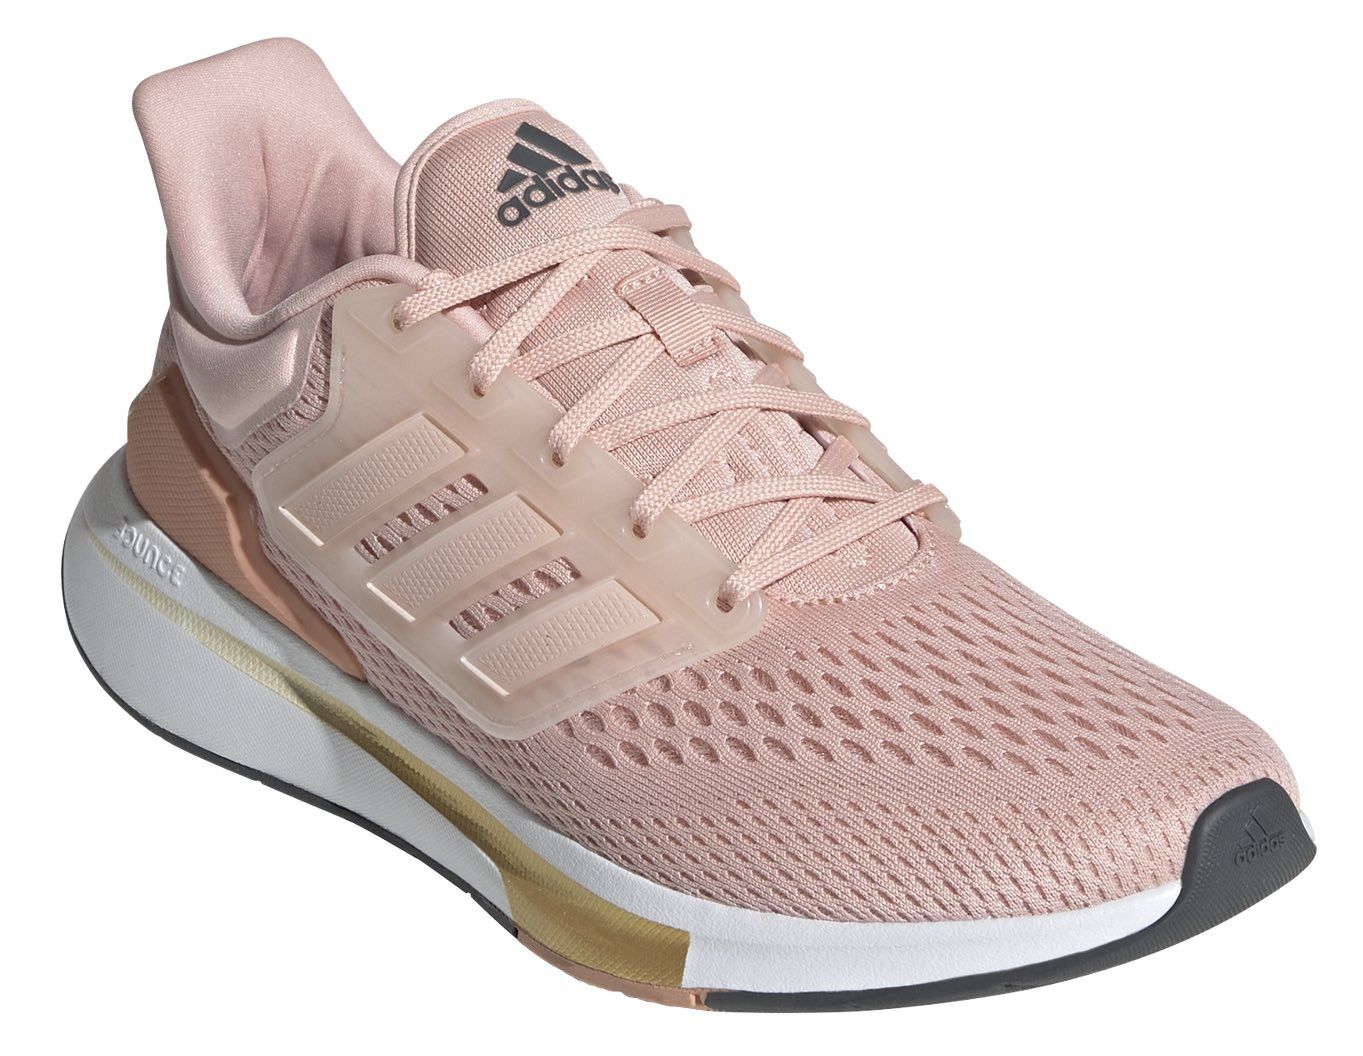 Dámské boty Adidas Eq21 Run Velikost bot (EU): 38 (2/3) / Barva: růžová